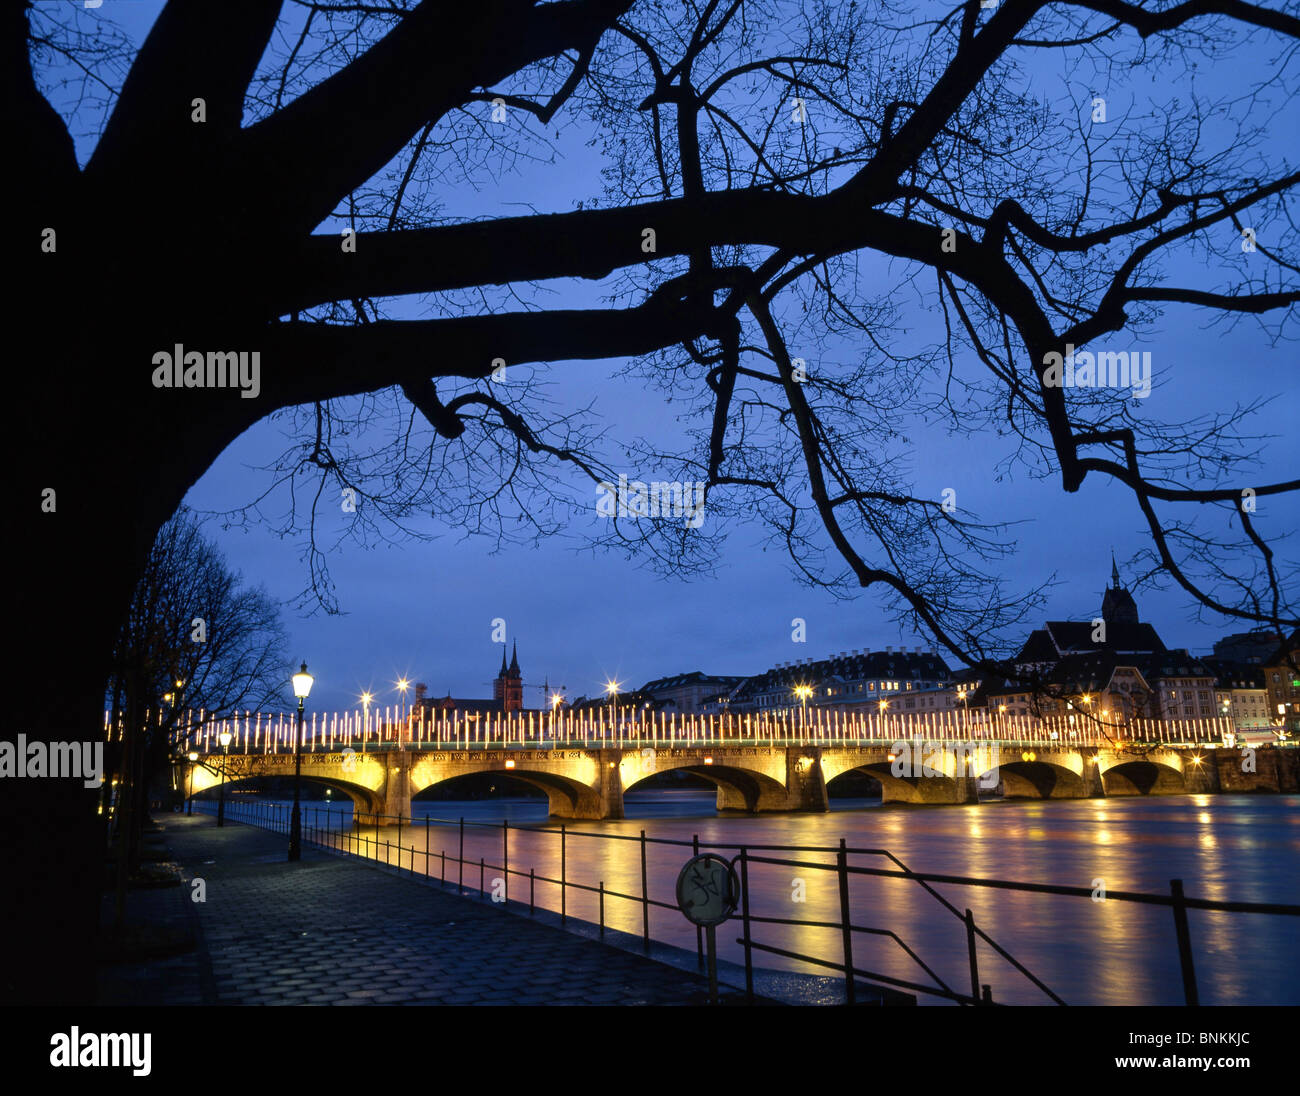 Der Schweiz Weihnachtsbeleuchtung Basler Rheinbrücke Beleuchtung Beleuchtung bis Weihnachten Stadt Stadt Fluss Abend dunkel Dunkelheit Stockfoto